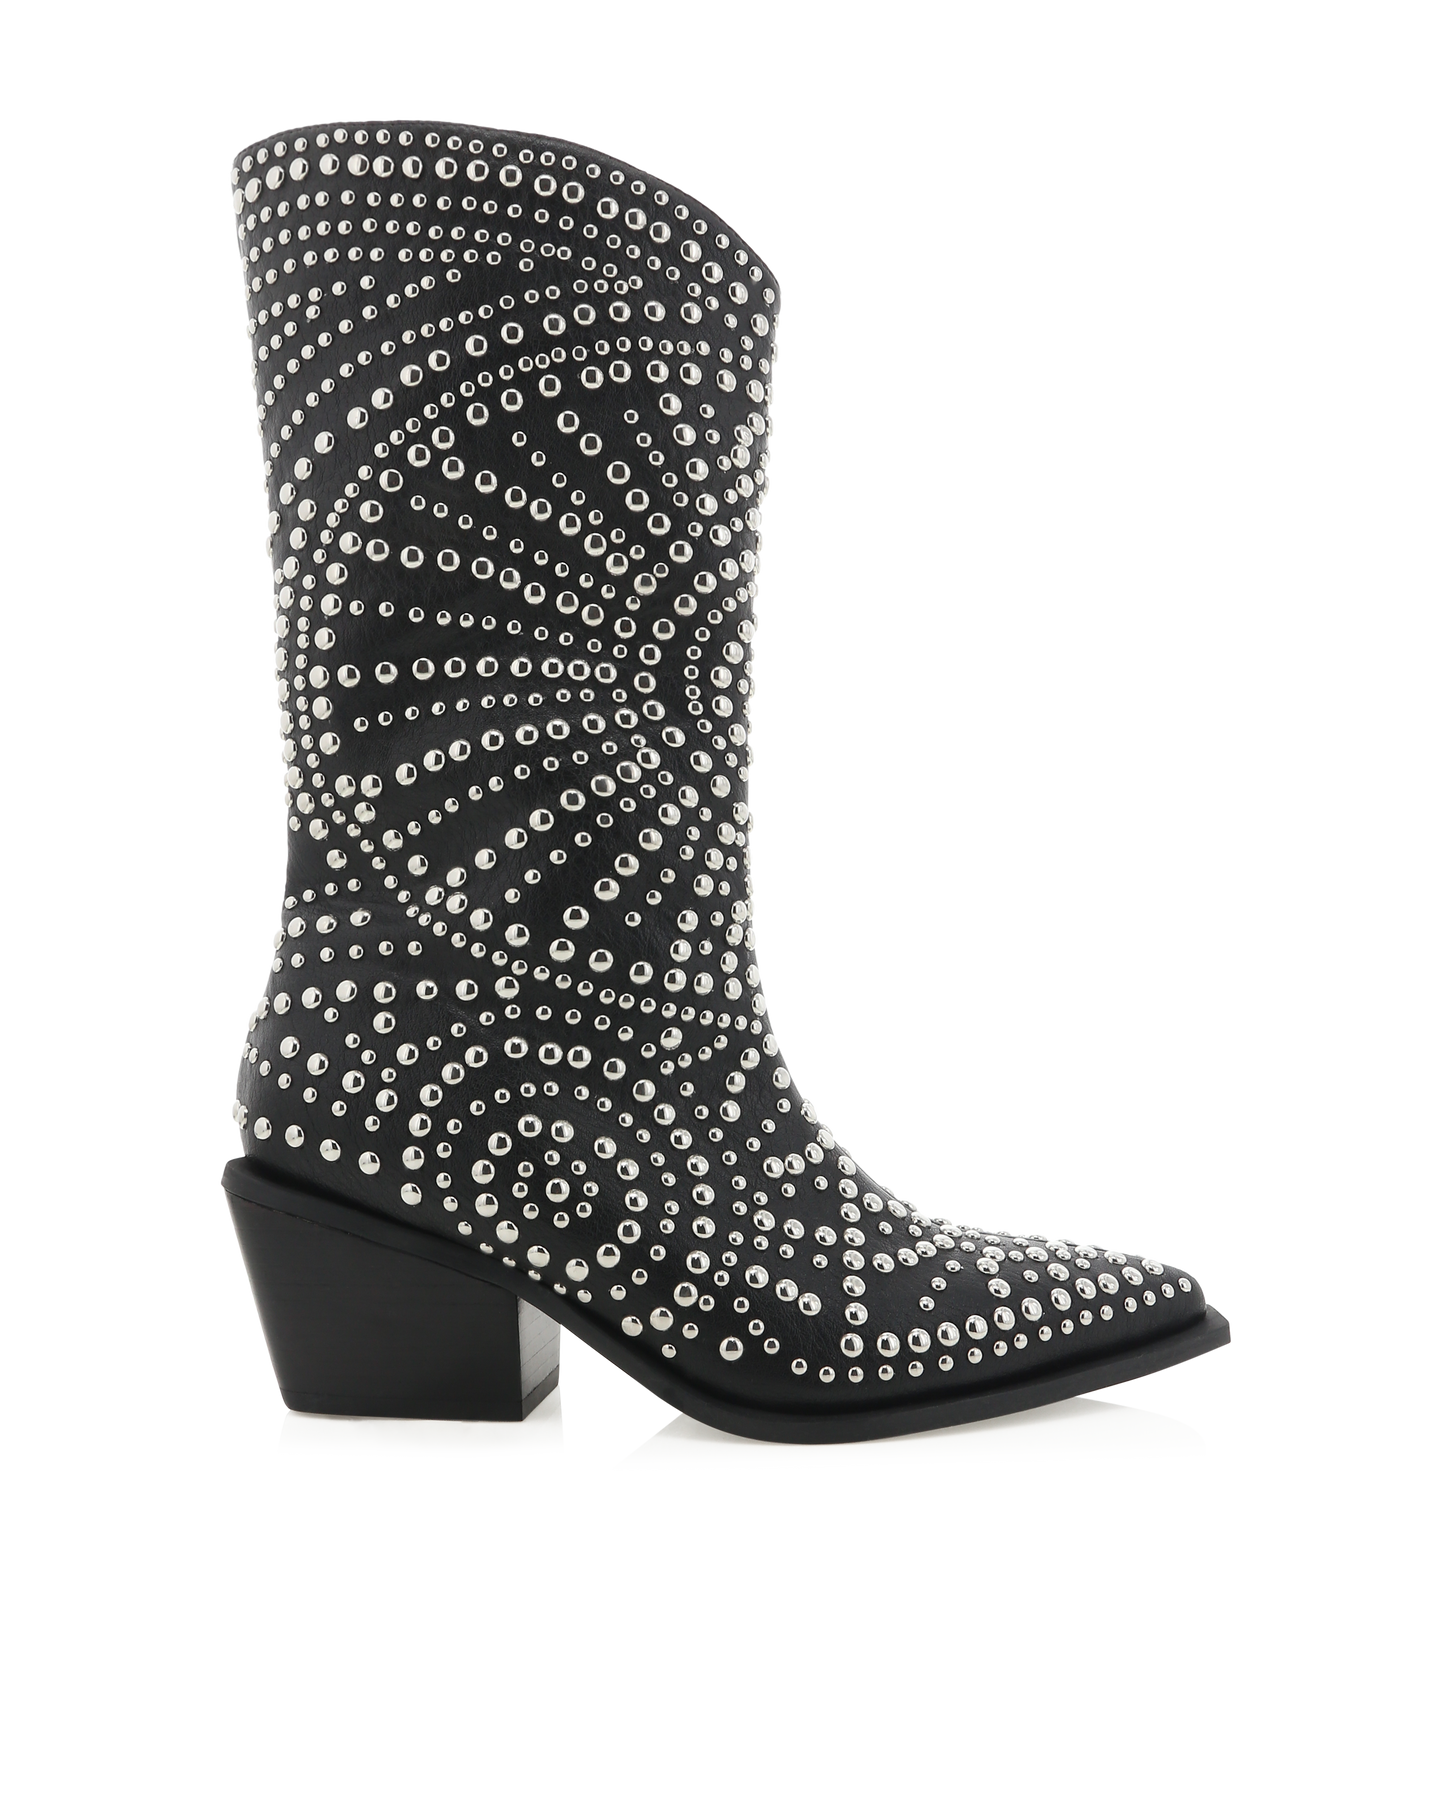 yori boot, a black mid leg cowboy boot with silver stud embellishments 